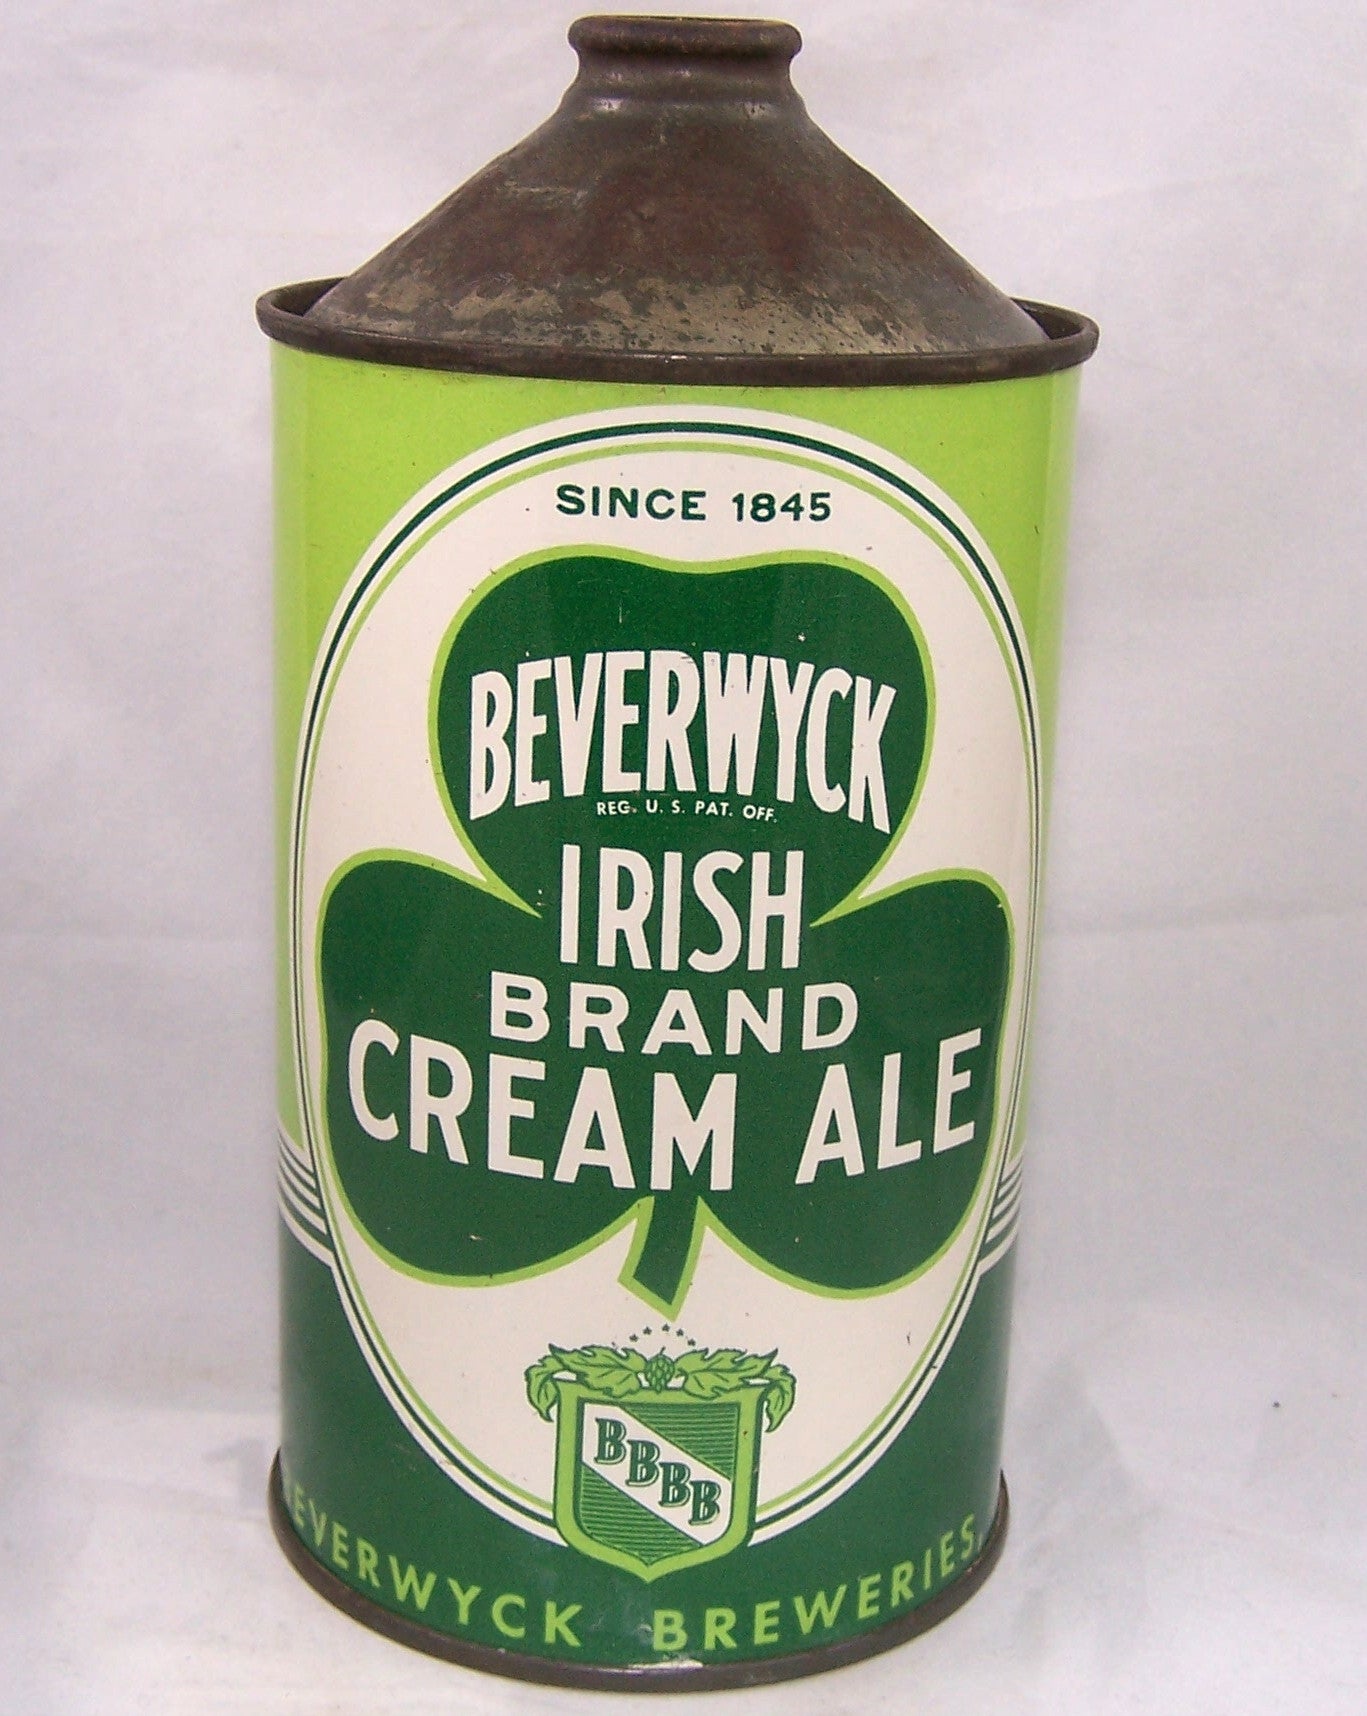 Beverwyck Irish Brand Cream Ale, USBC 203-04 Grade 1 to 1/1+ Sold on 12/29/16